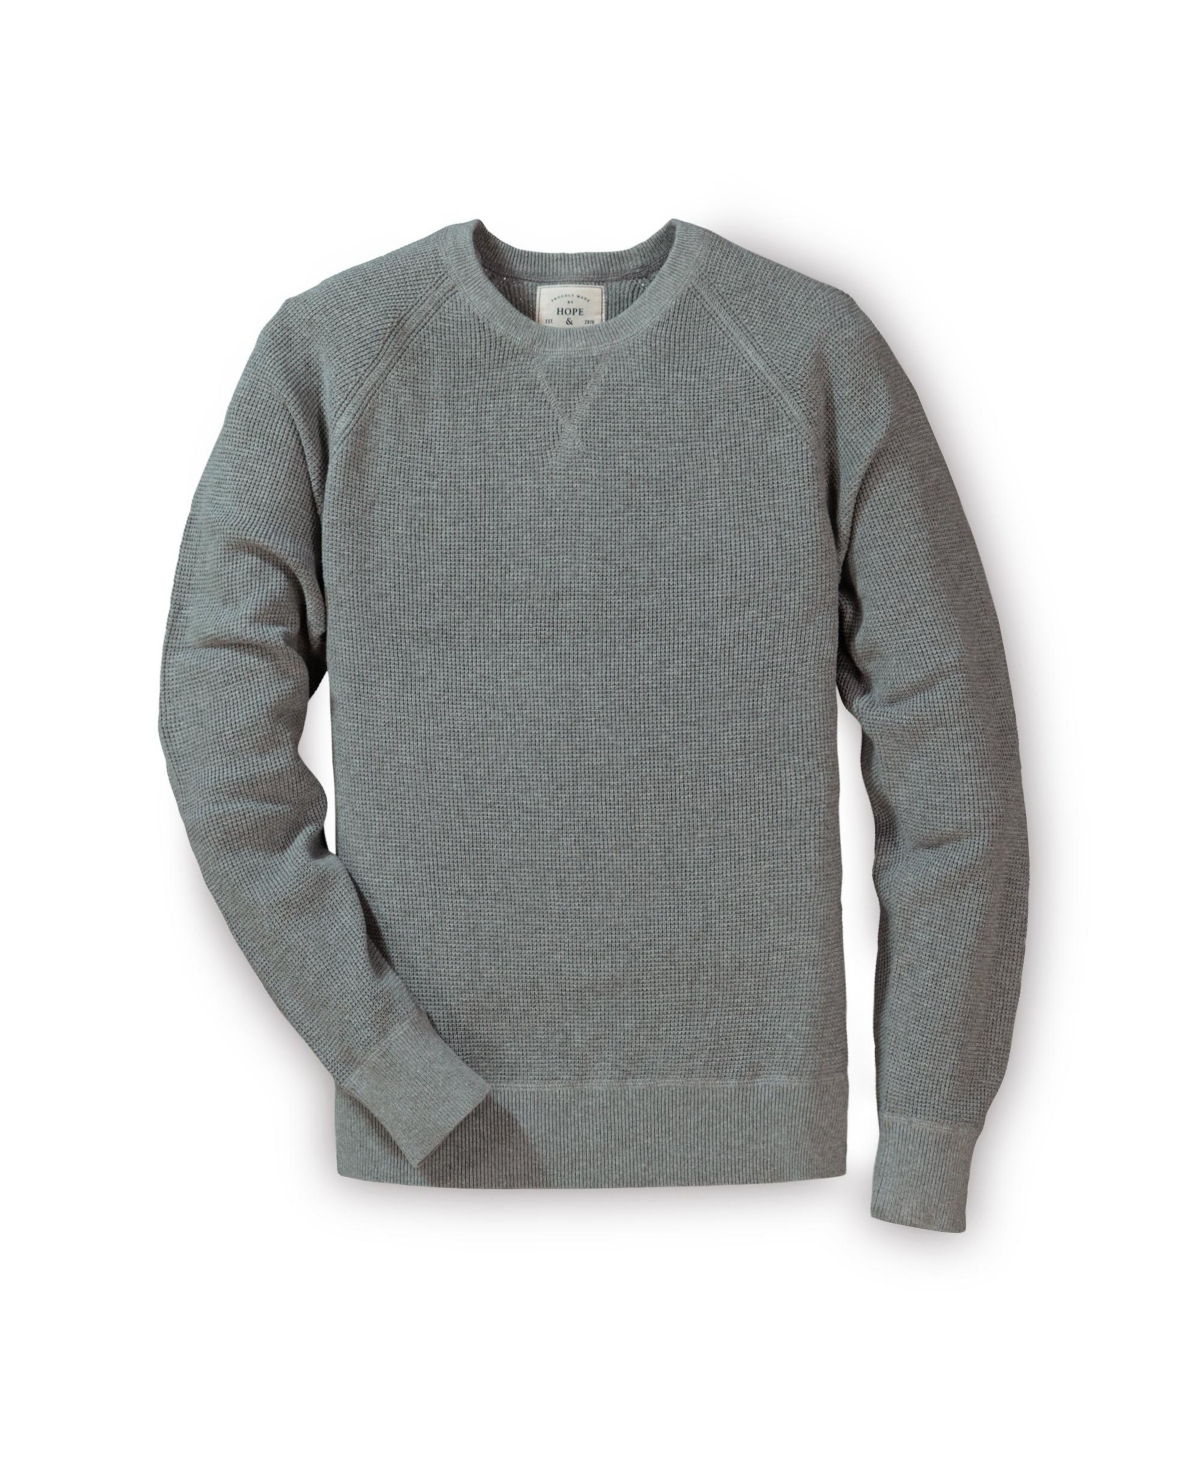 Men's Waffle Knit Pullover Sweater - Dark Gray Heather